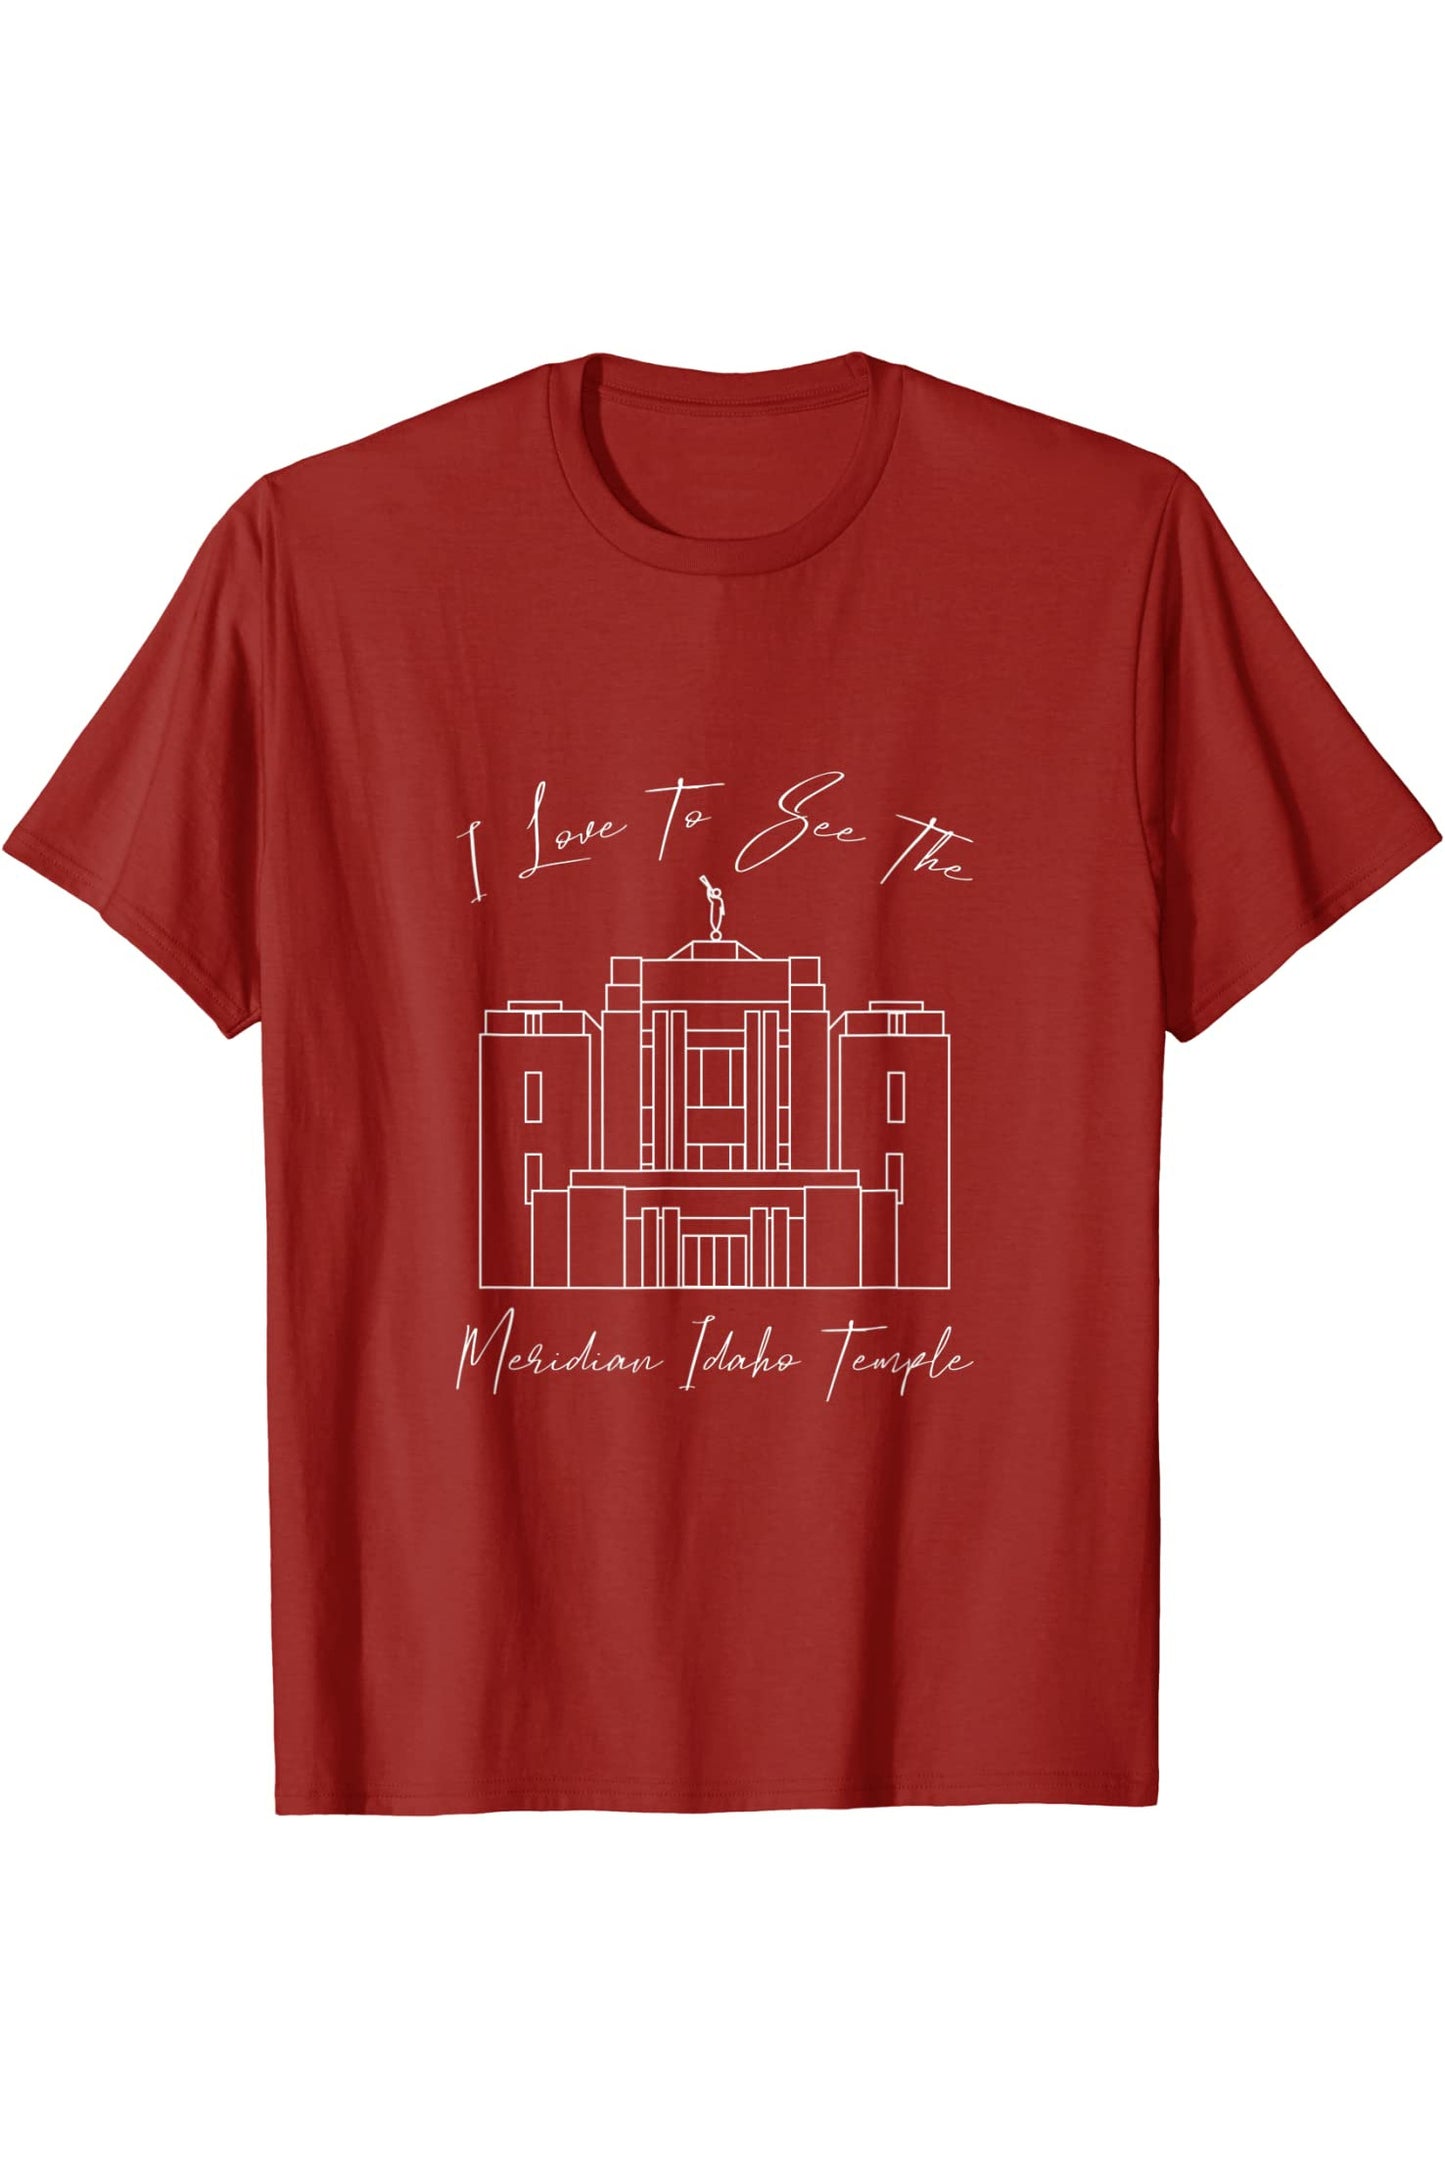 Meridian Idaho Temple T-Shirt - Calligraphy Style (English) US